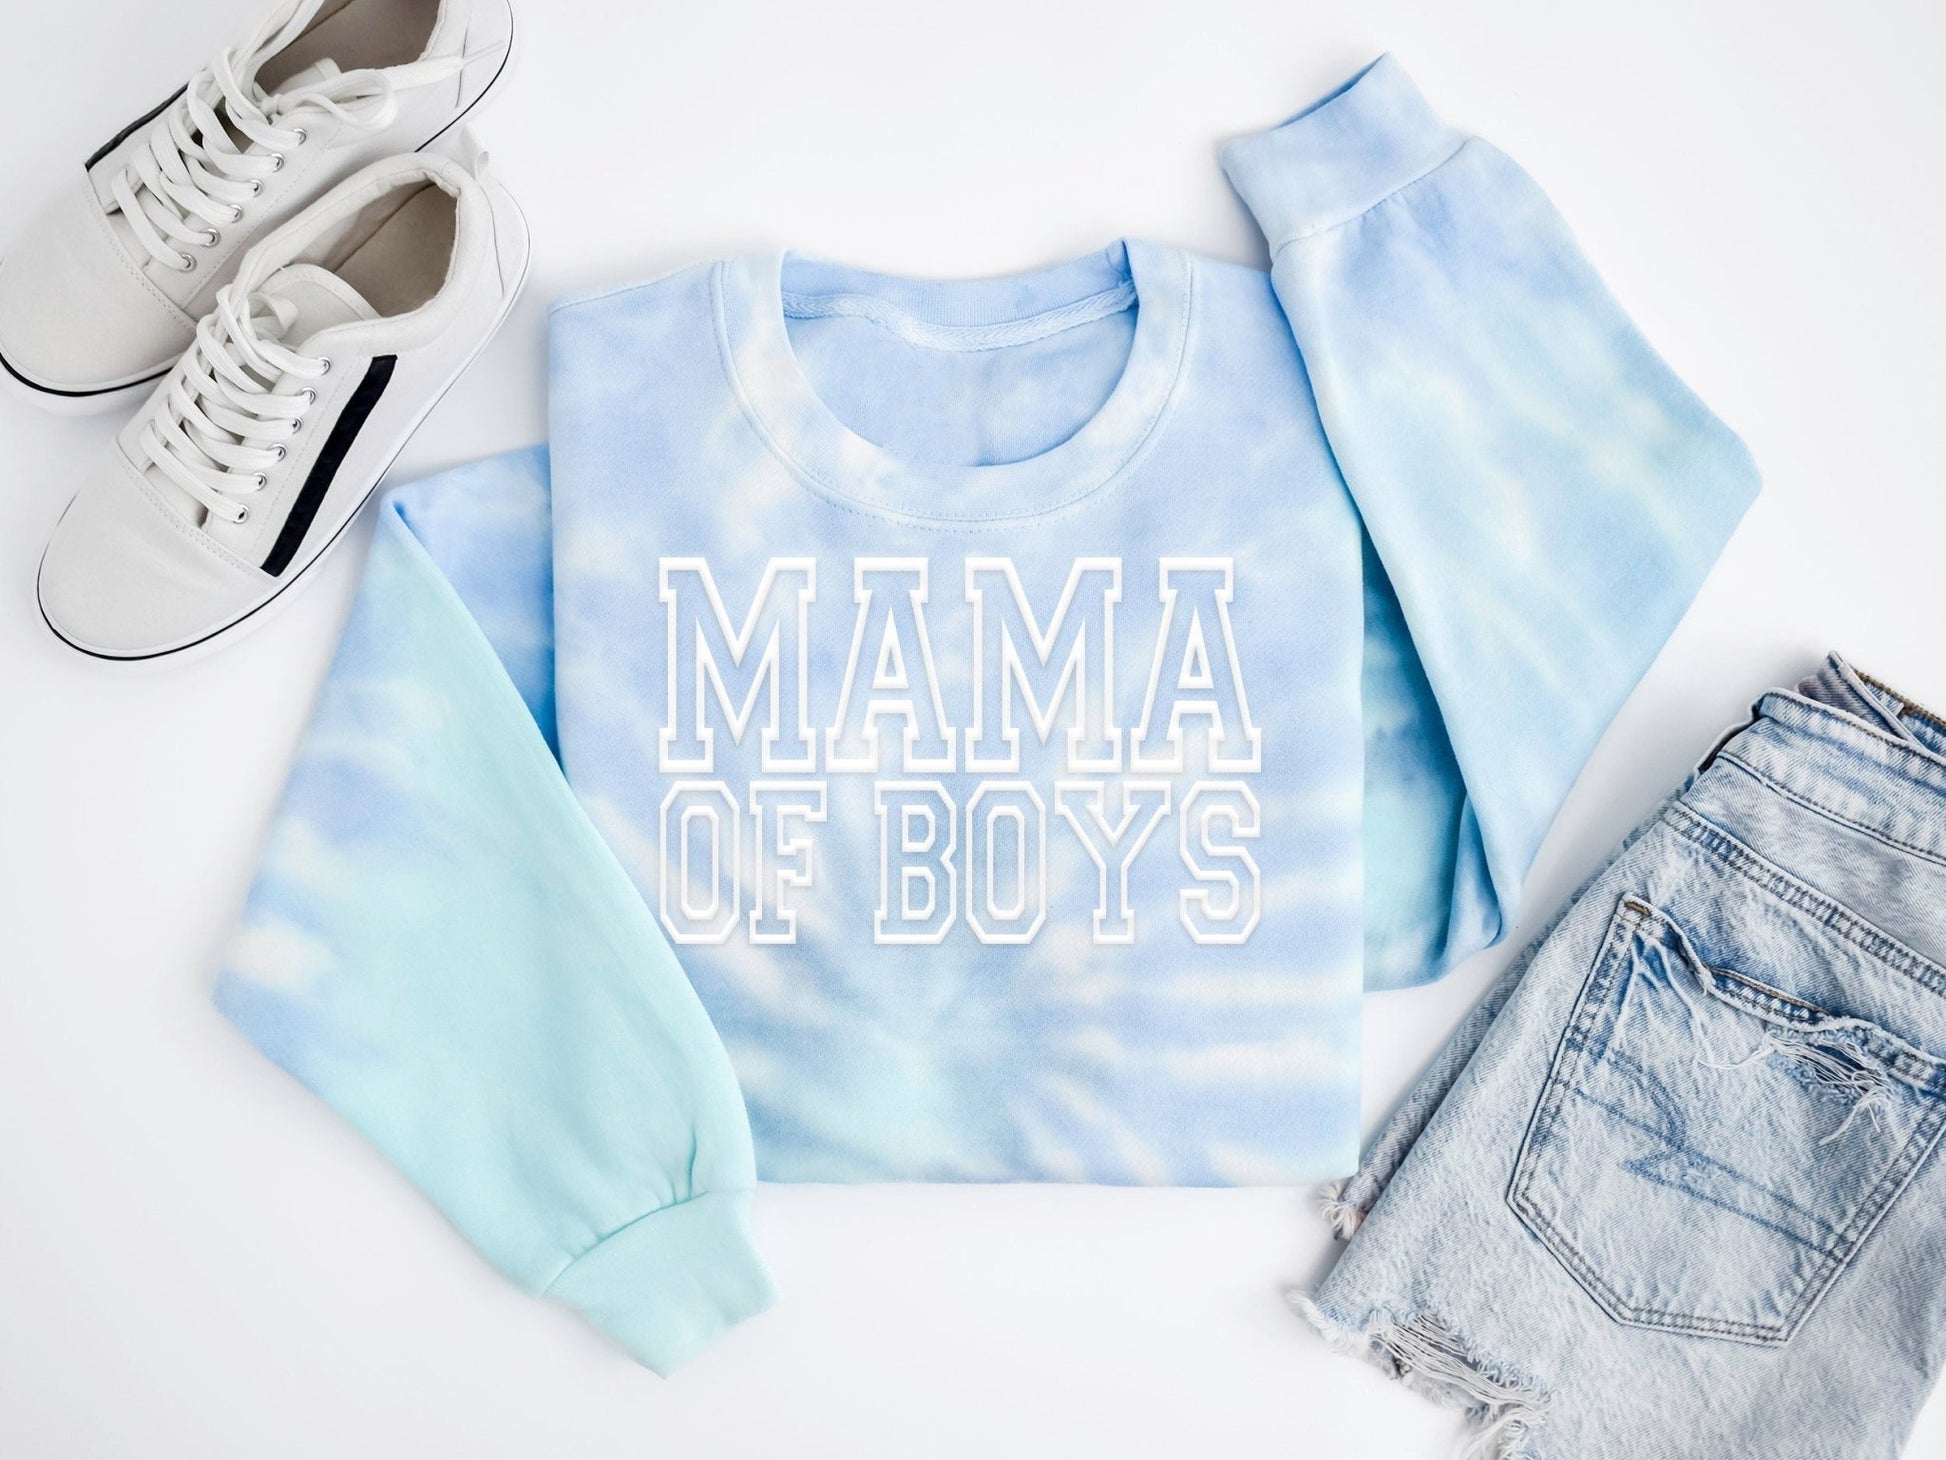 Mama Life Tie Dye Sweatshirt Gift for Mothers Day - Squishy Cheeks